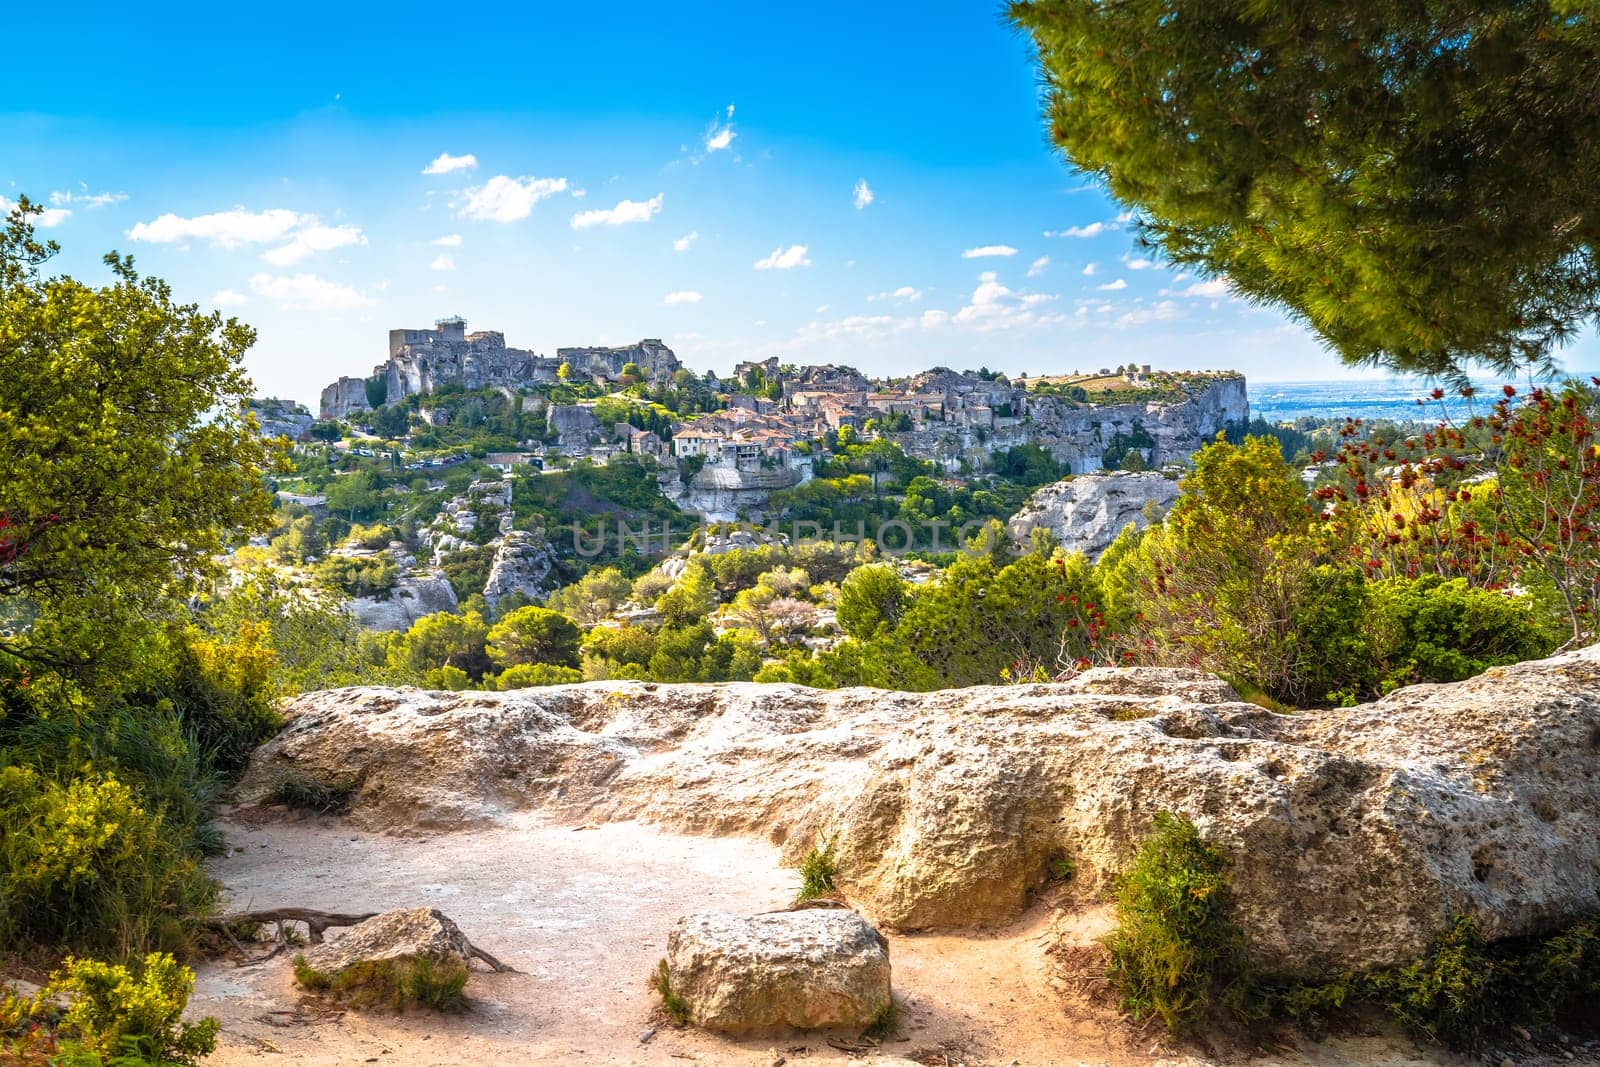 Les Baux de Provence scenic town on the rock view by xbrchx